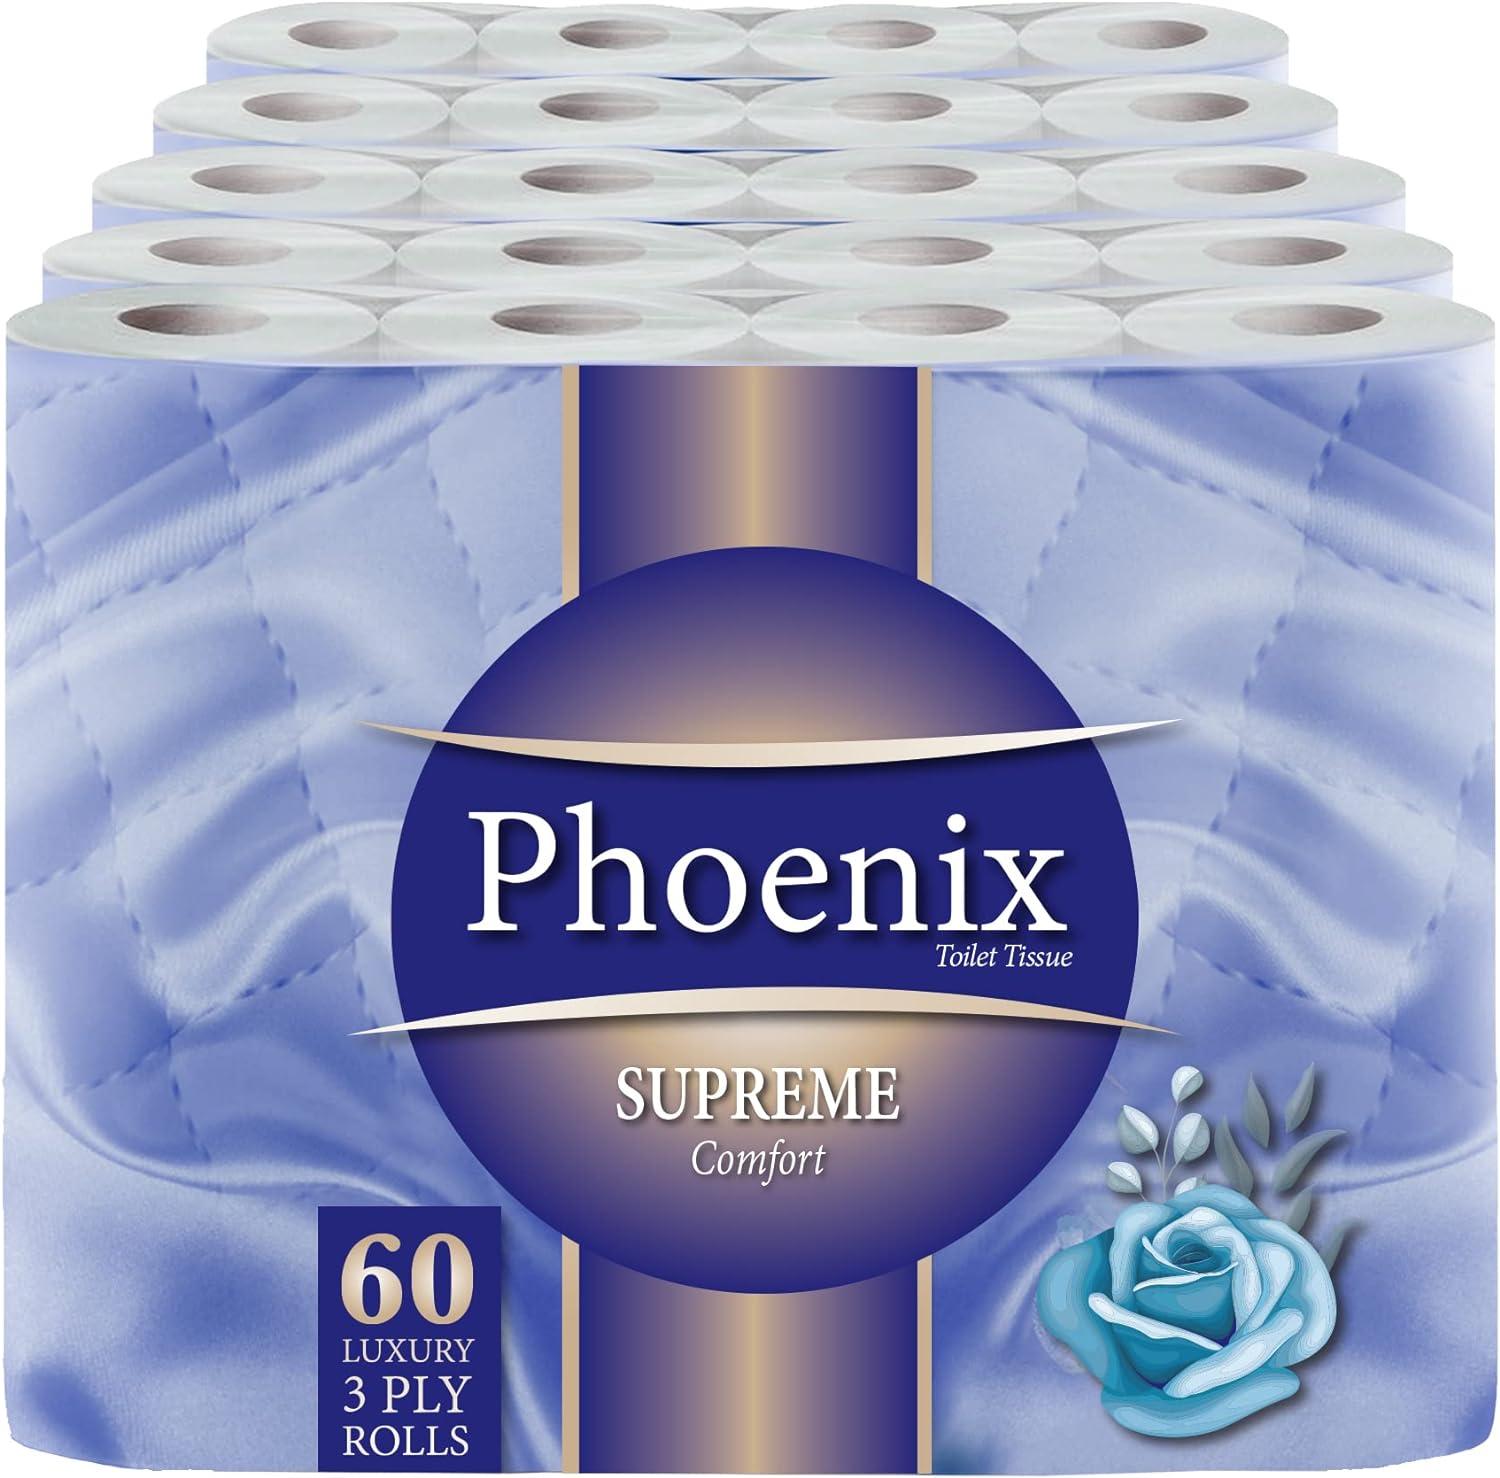 phoenix soft supreme luxury 60 toilet rolls  phoenix b0bgt6wzyz